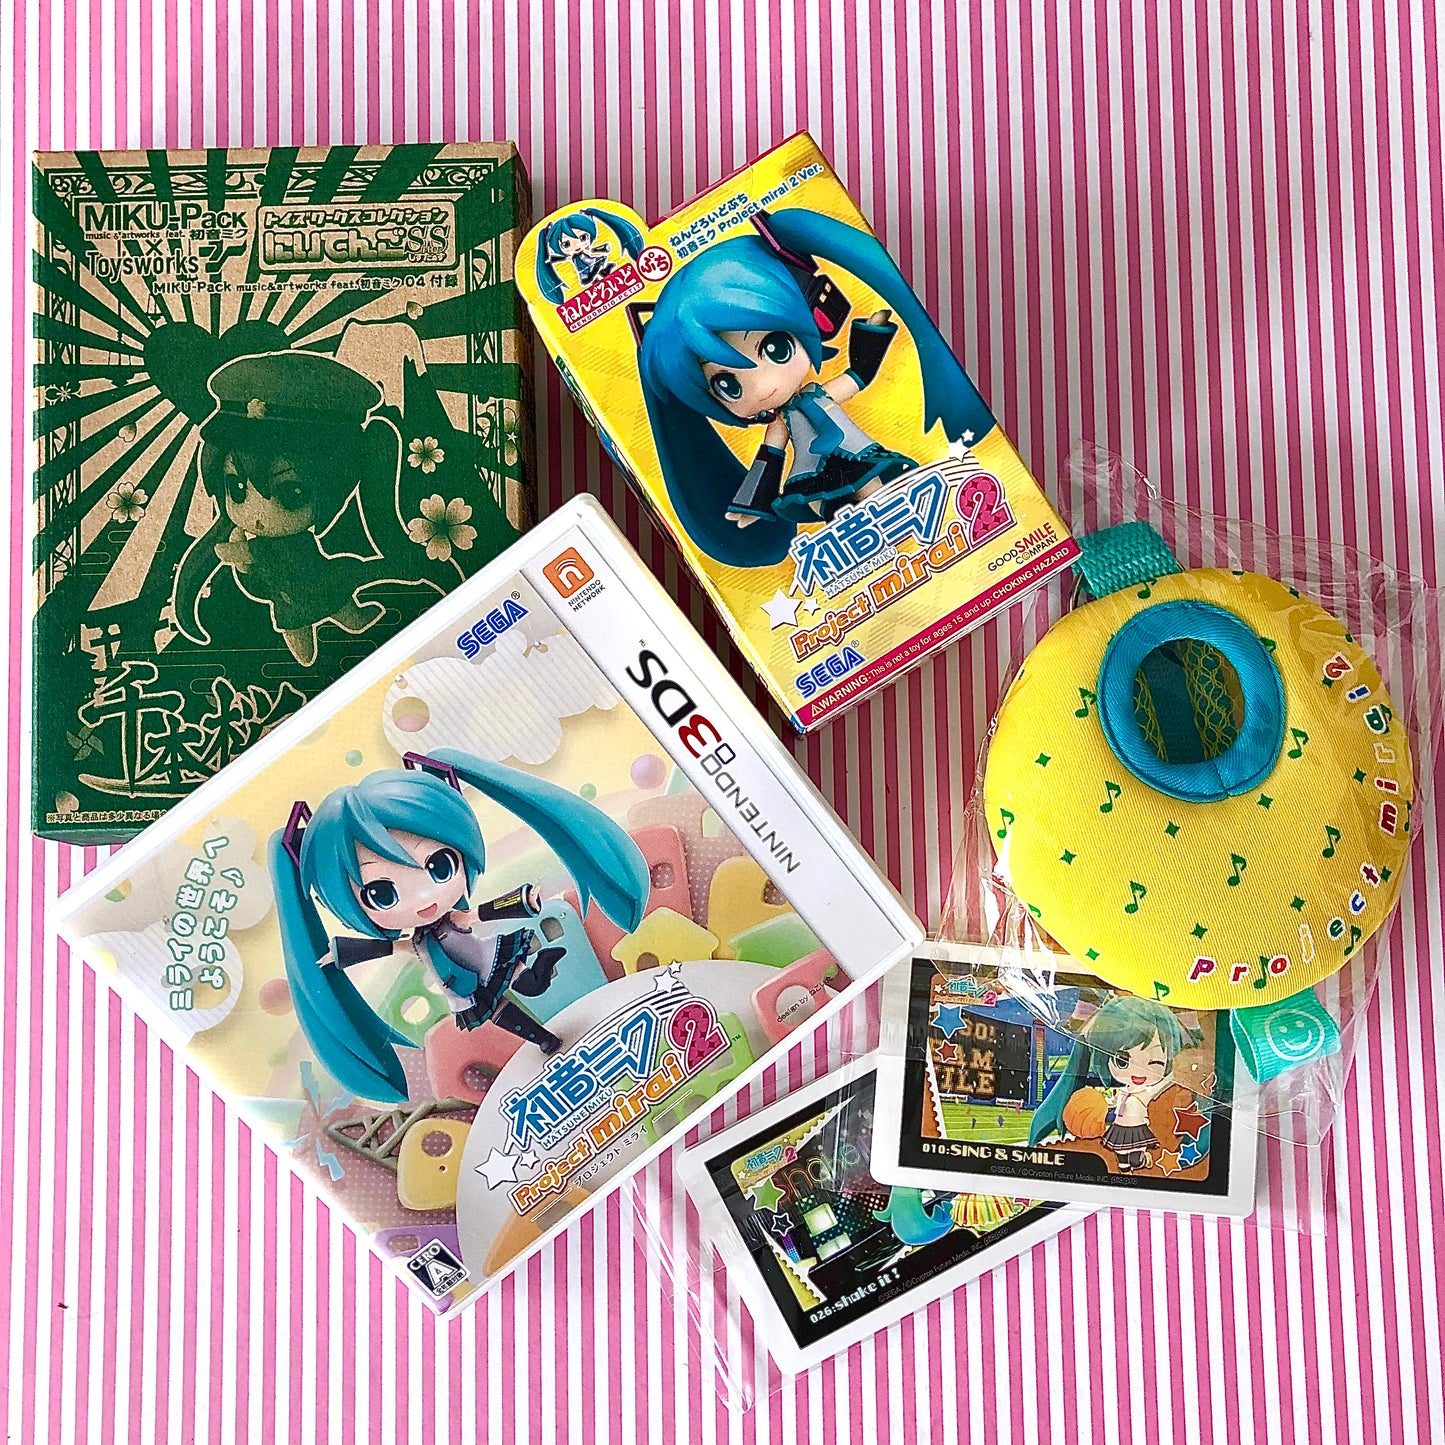 Vocaloid video game Hatsune Miku Project Mirai 2 Limited Edition Nintendo 3DS JAPANESE